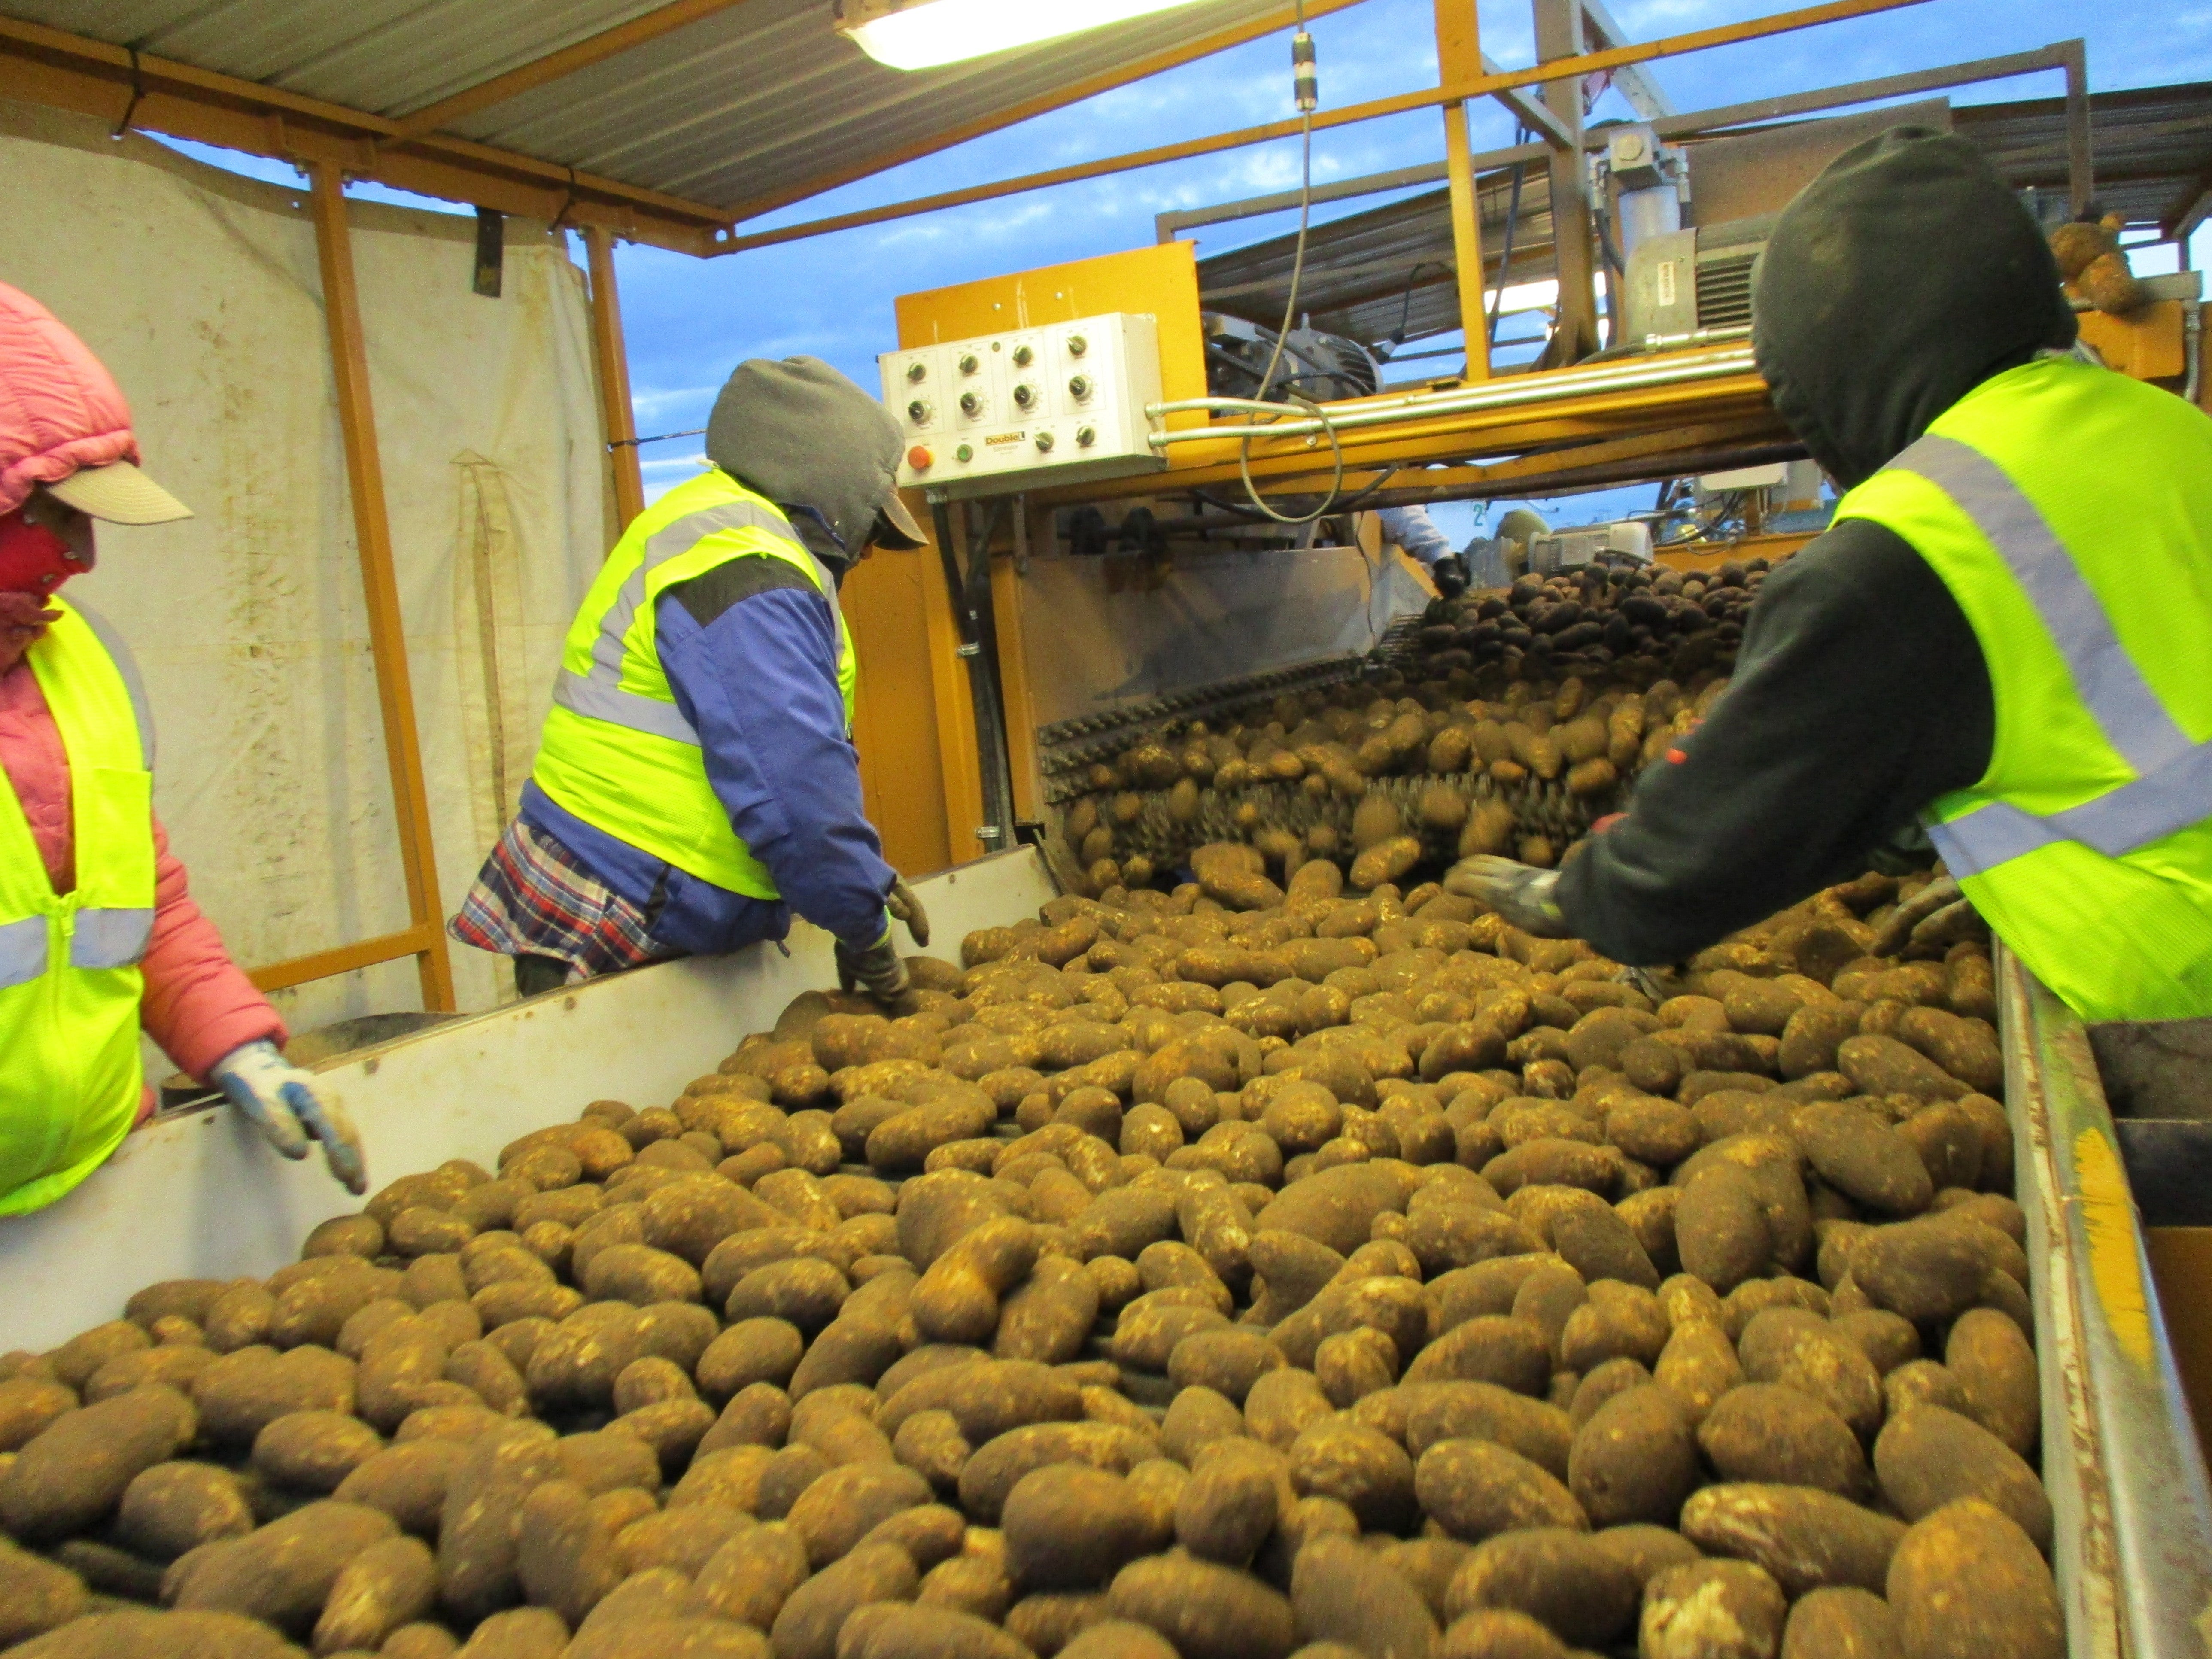 Farm workers inspecting conveyor belt of potatoes